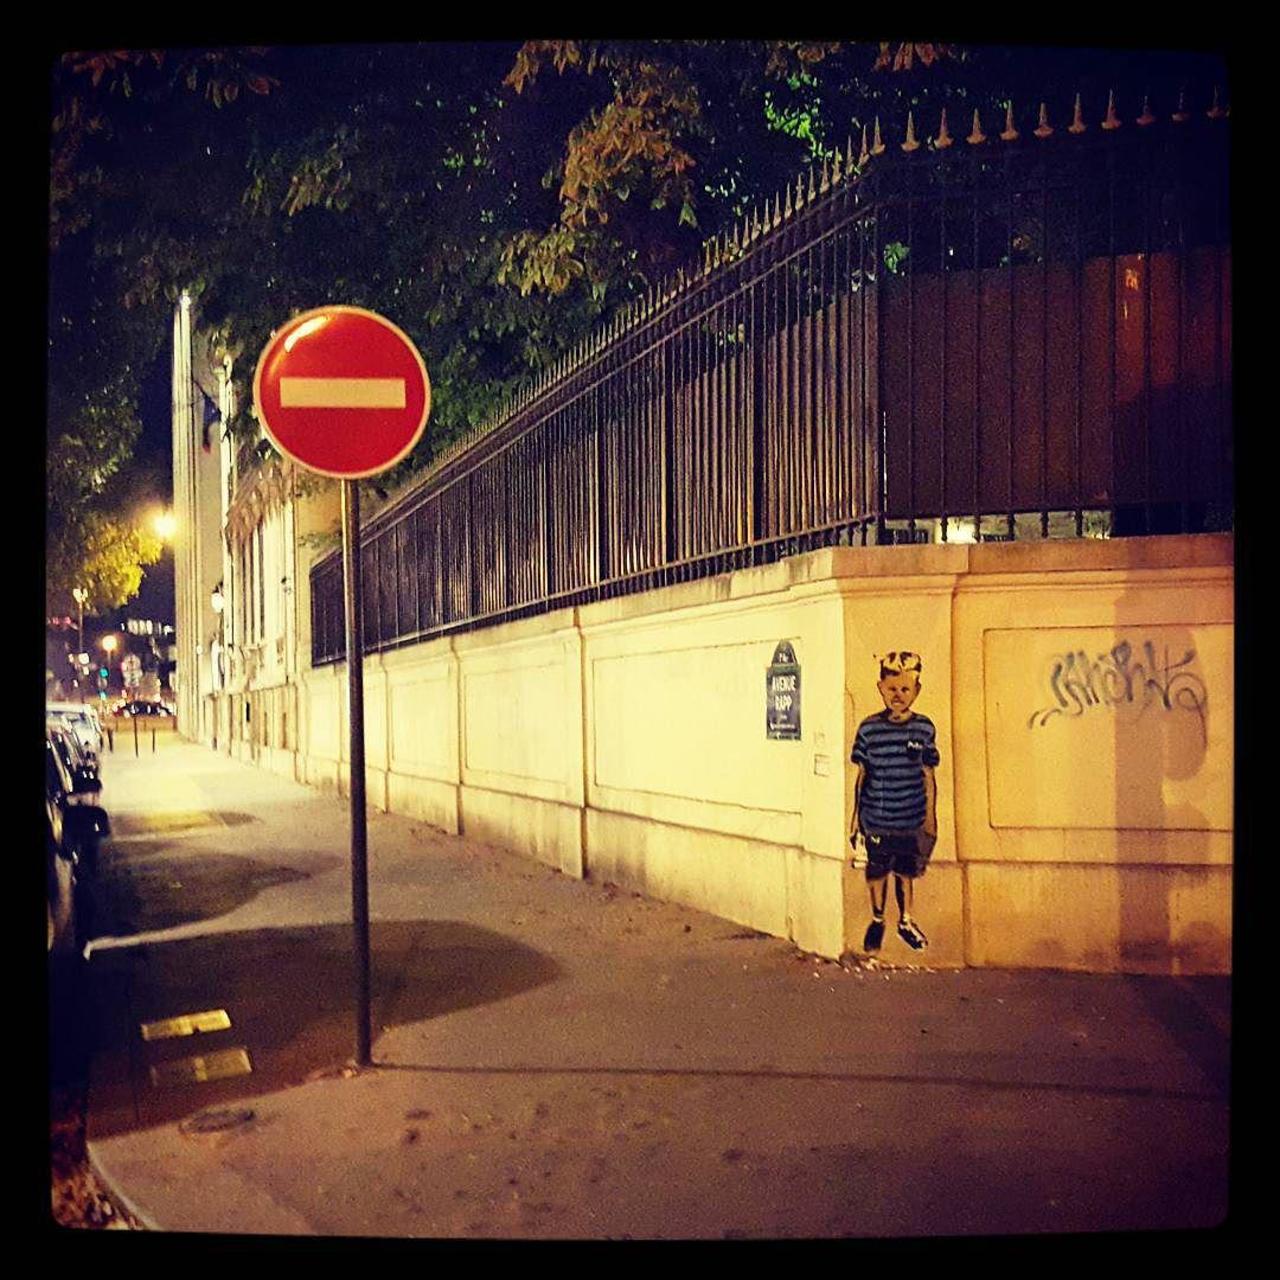 #Paris #graffiti photo by @the169 http://ift.tt/1LbRDdk #StreetArt http://t.co/S2qCnRMZmM